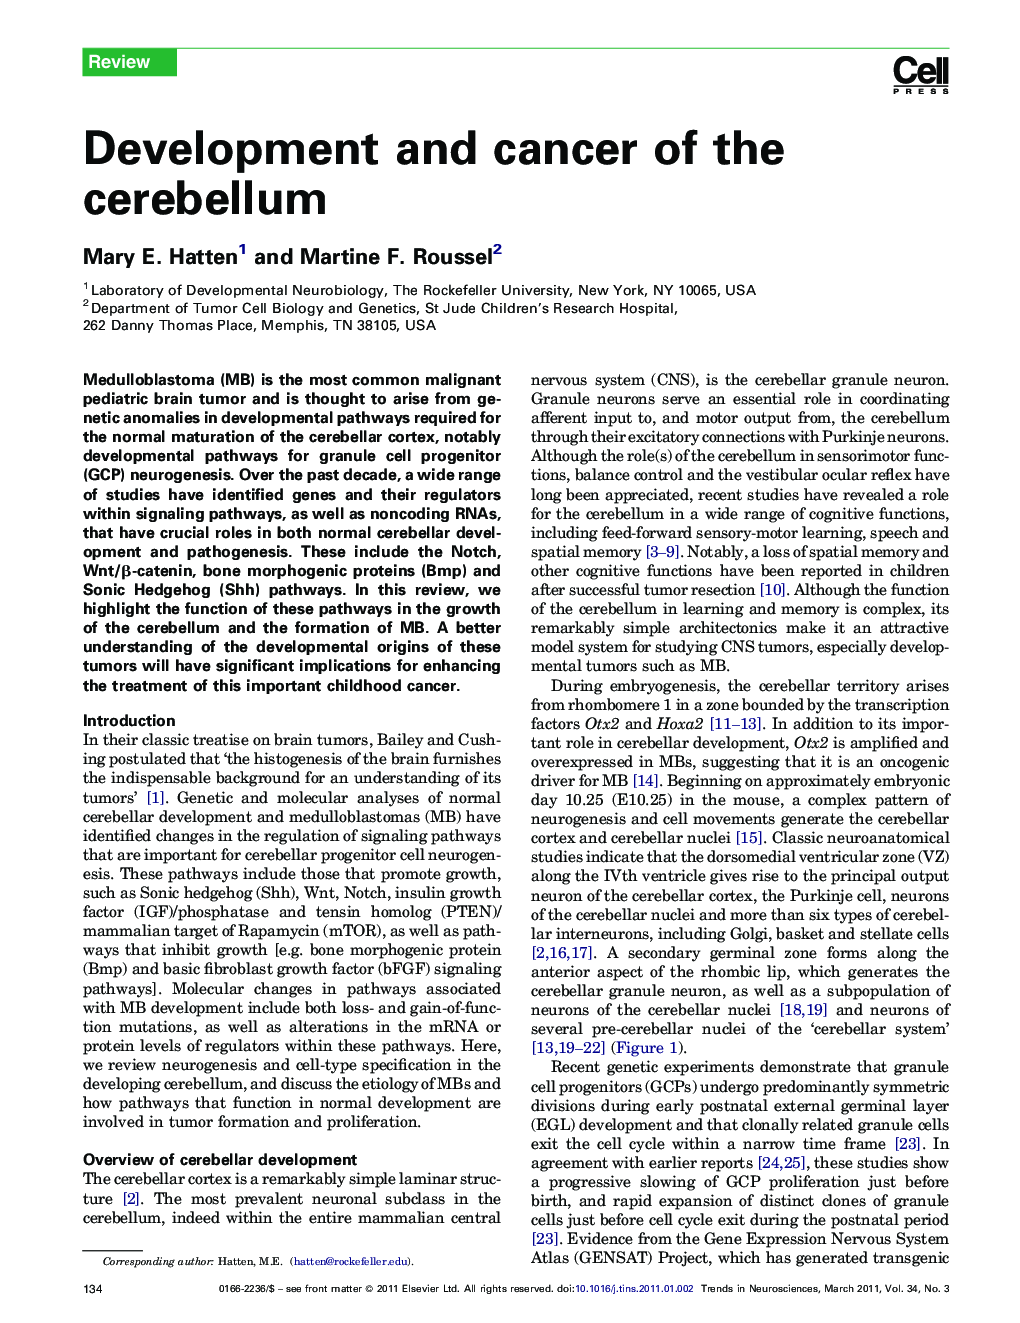 Development and cancer of the cerebellum